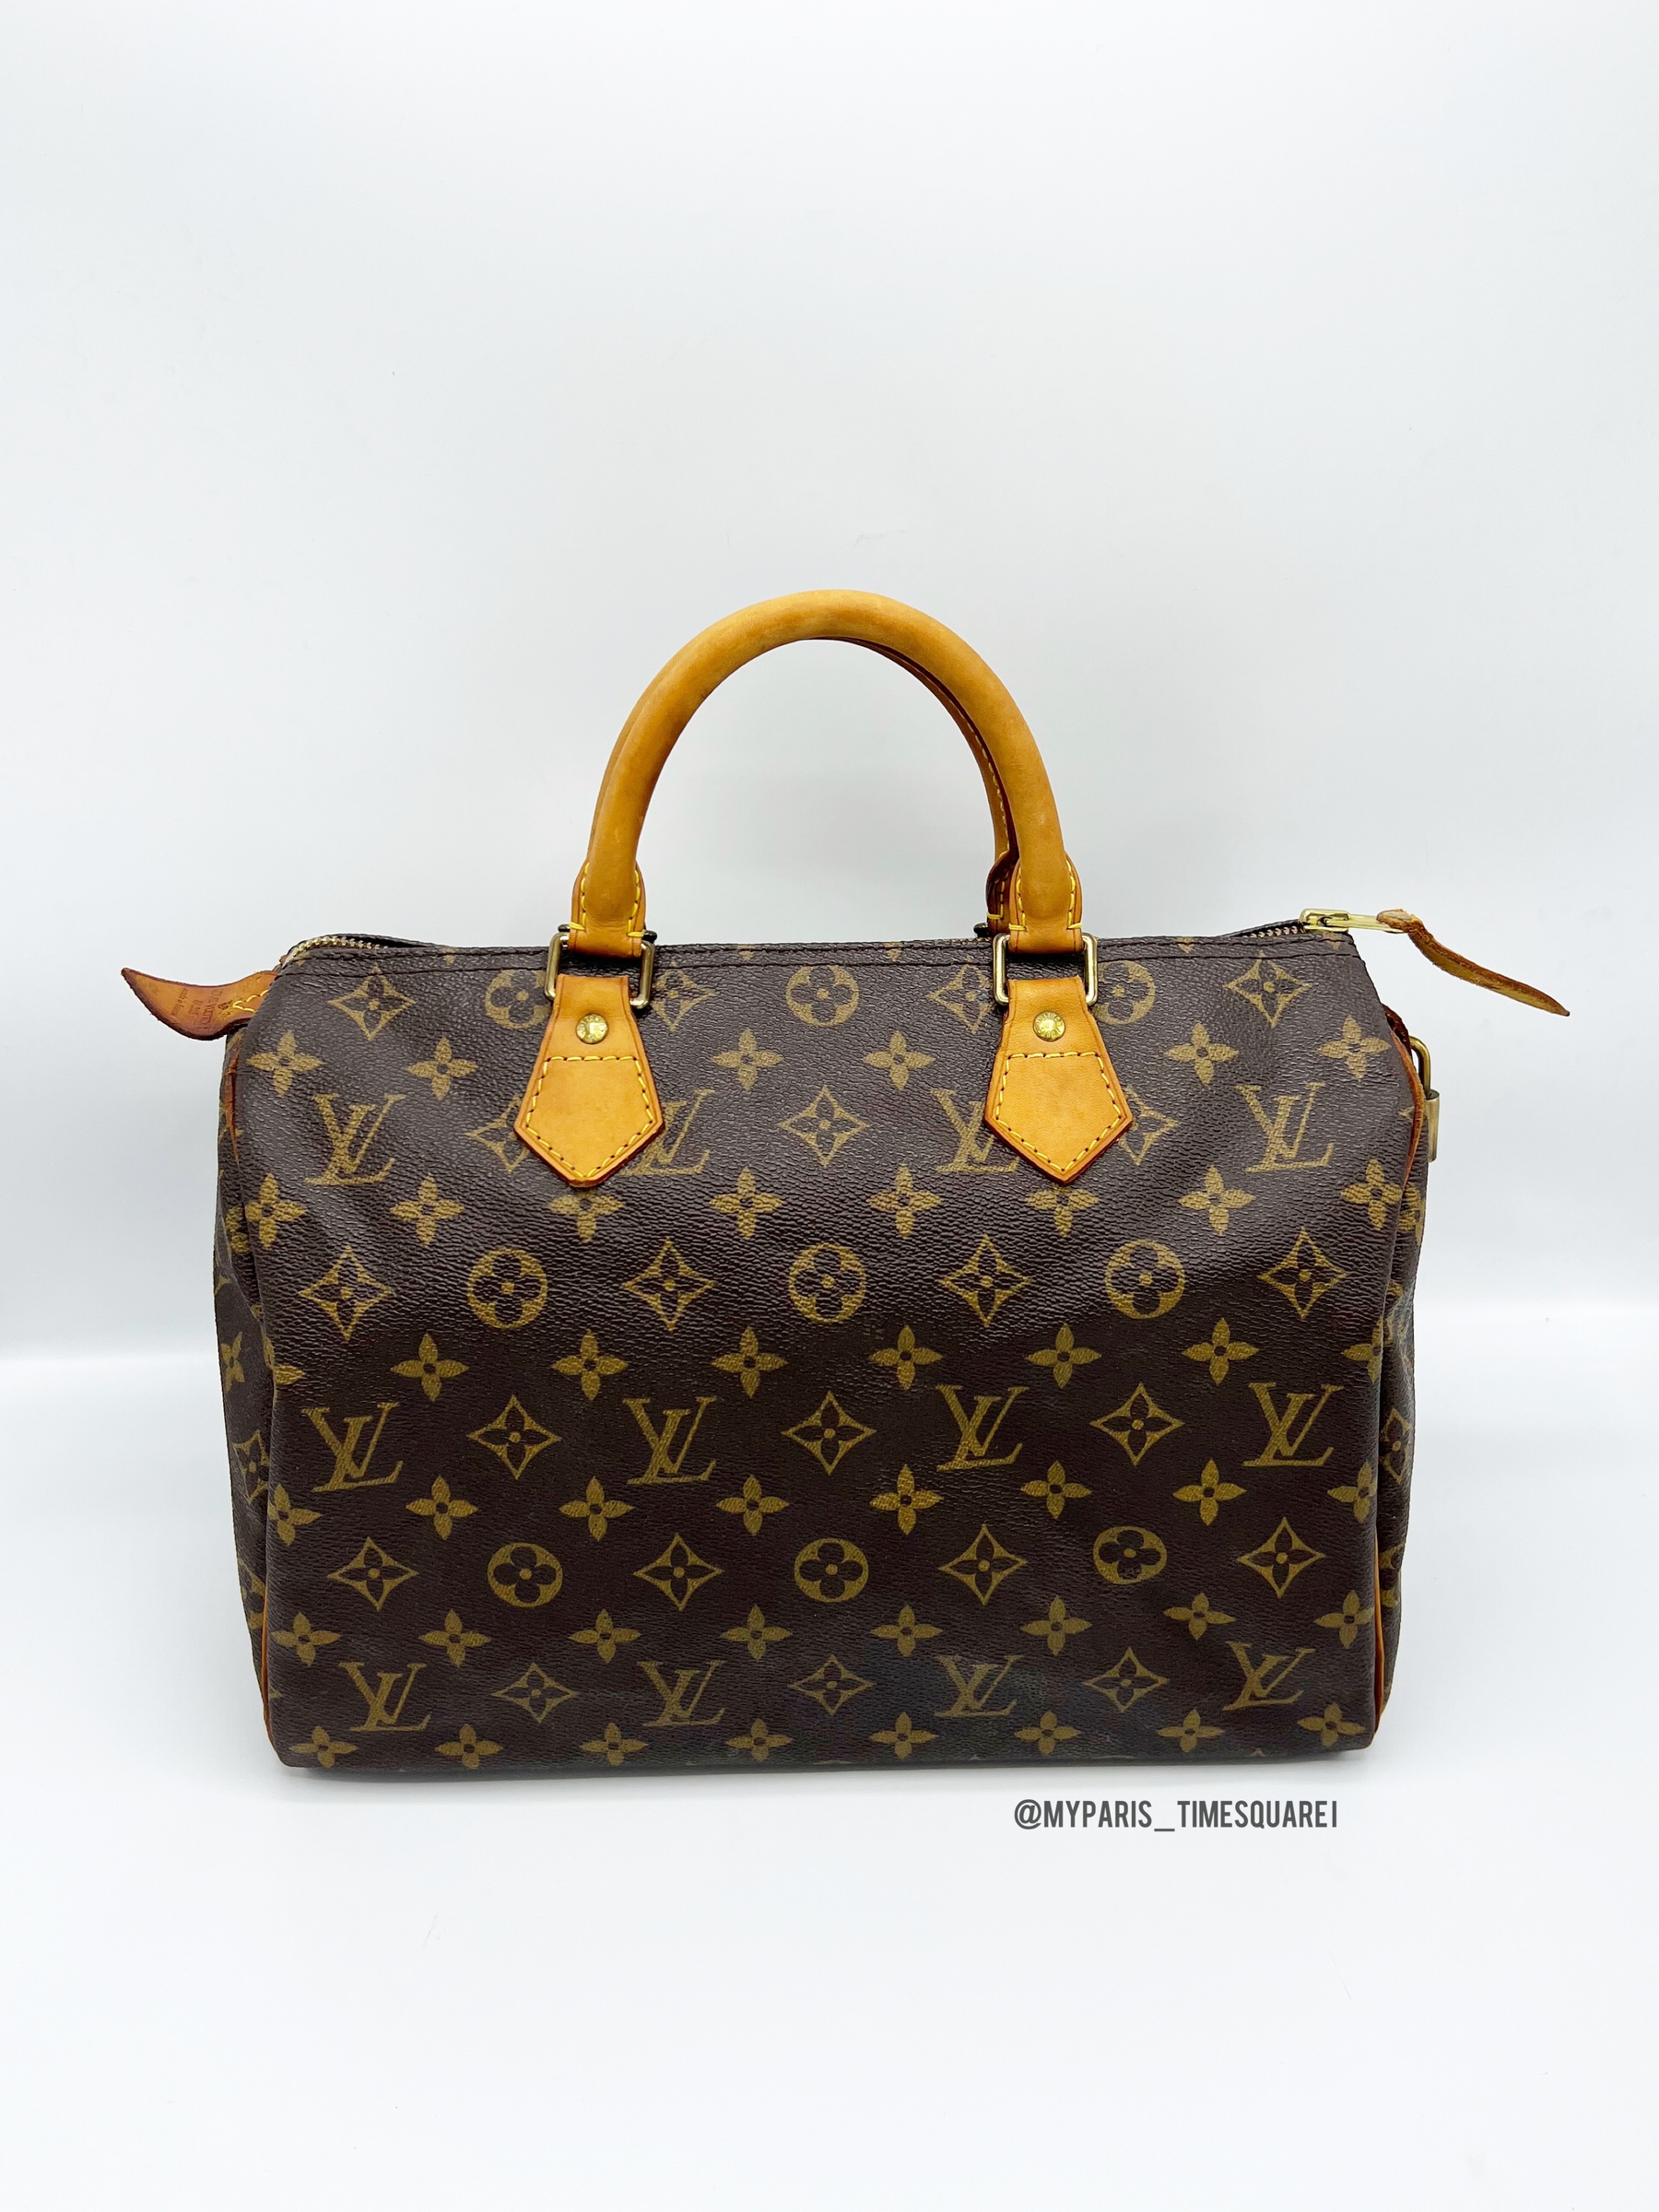 Louis Vuitton Speedy Bag  The 10 Iconic Bags Fashion Girls Would Kill to  Own  POPSUGAR Fashion Photo 4